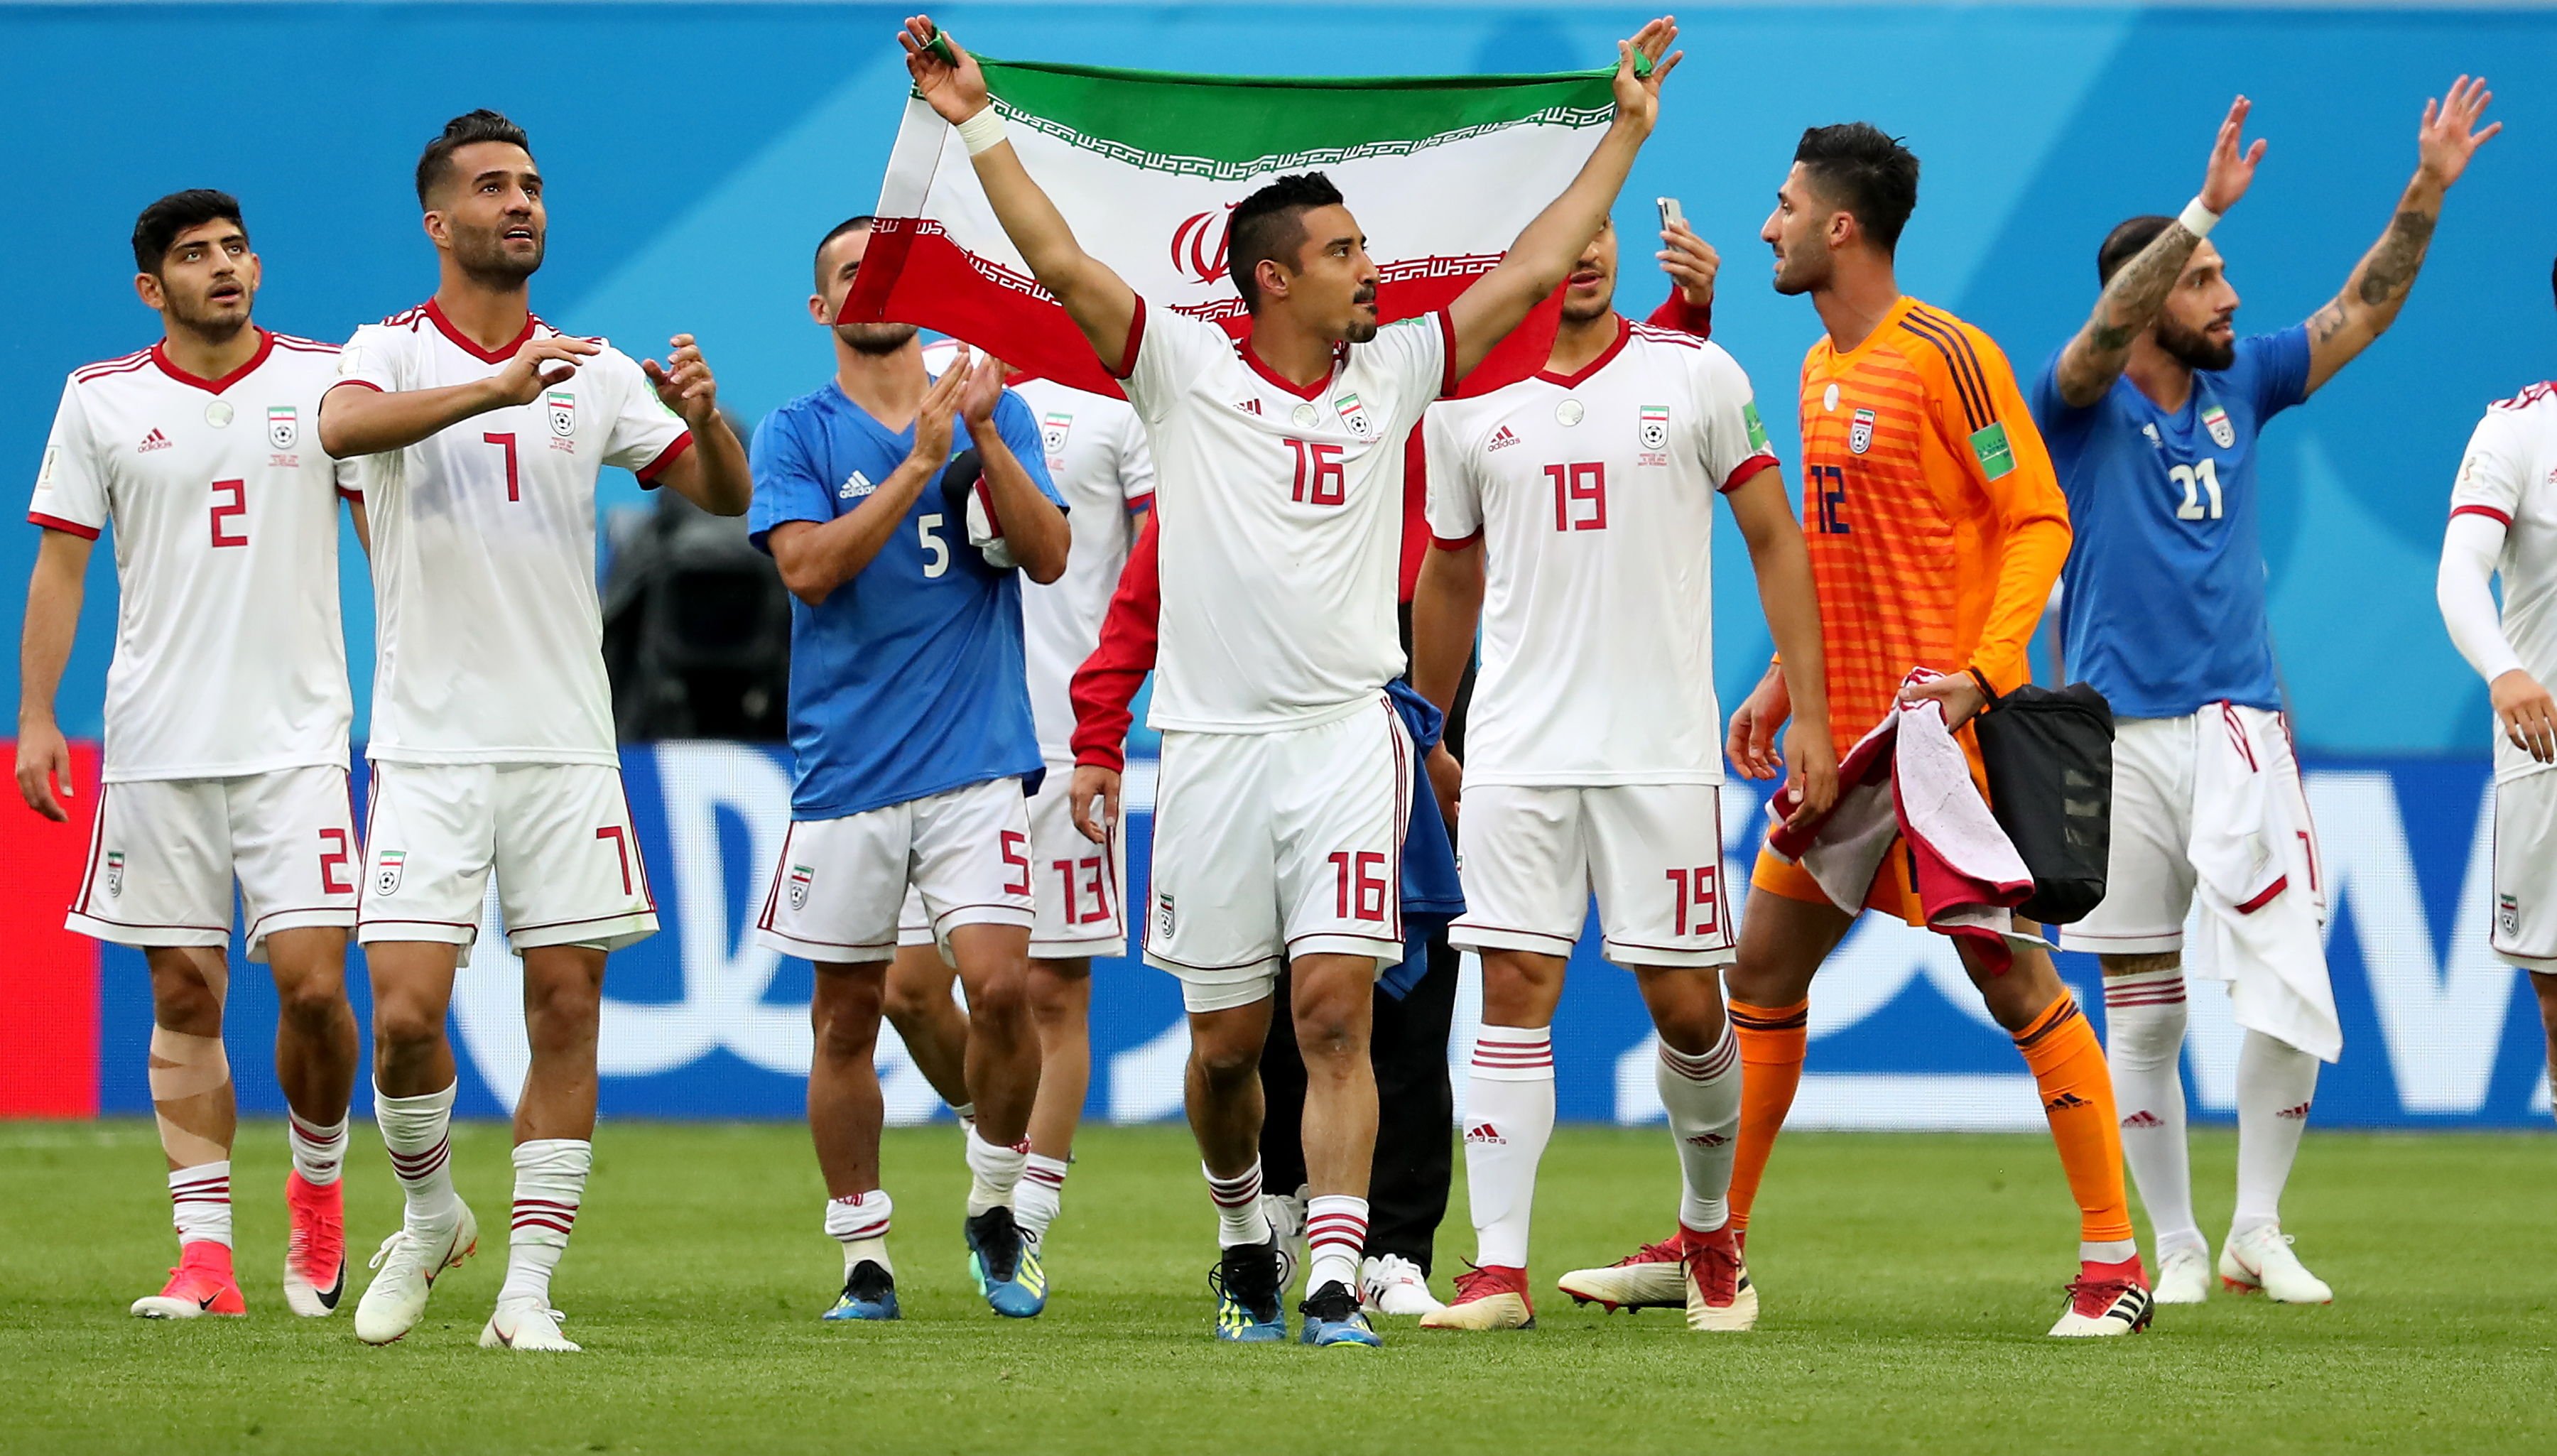 Irán se adjudica la primera siesta del Mundial (0-1)